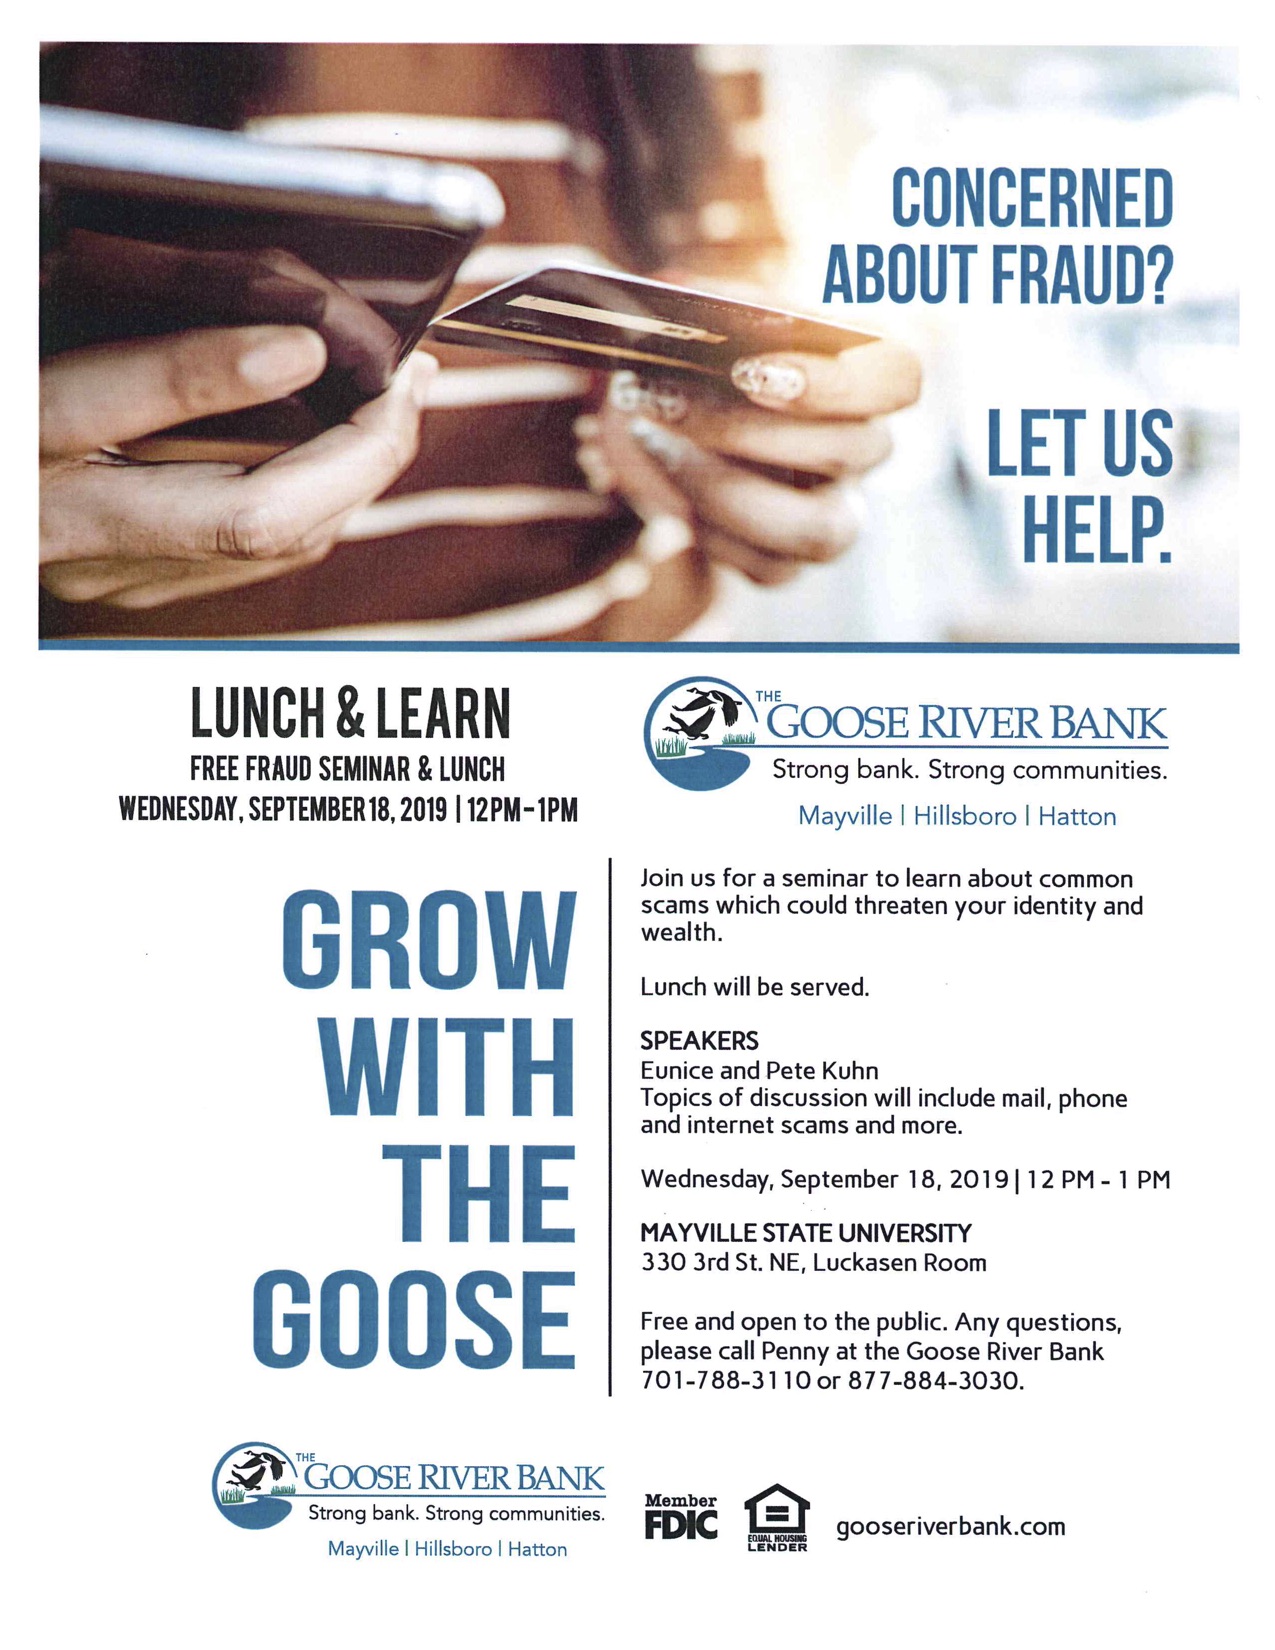 Lunch & Learn Fraud Seminar @ Mayville State Luckasen Room